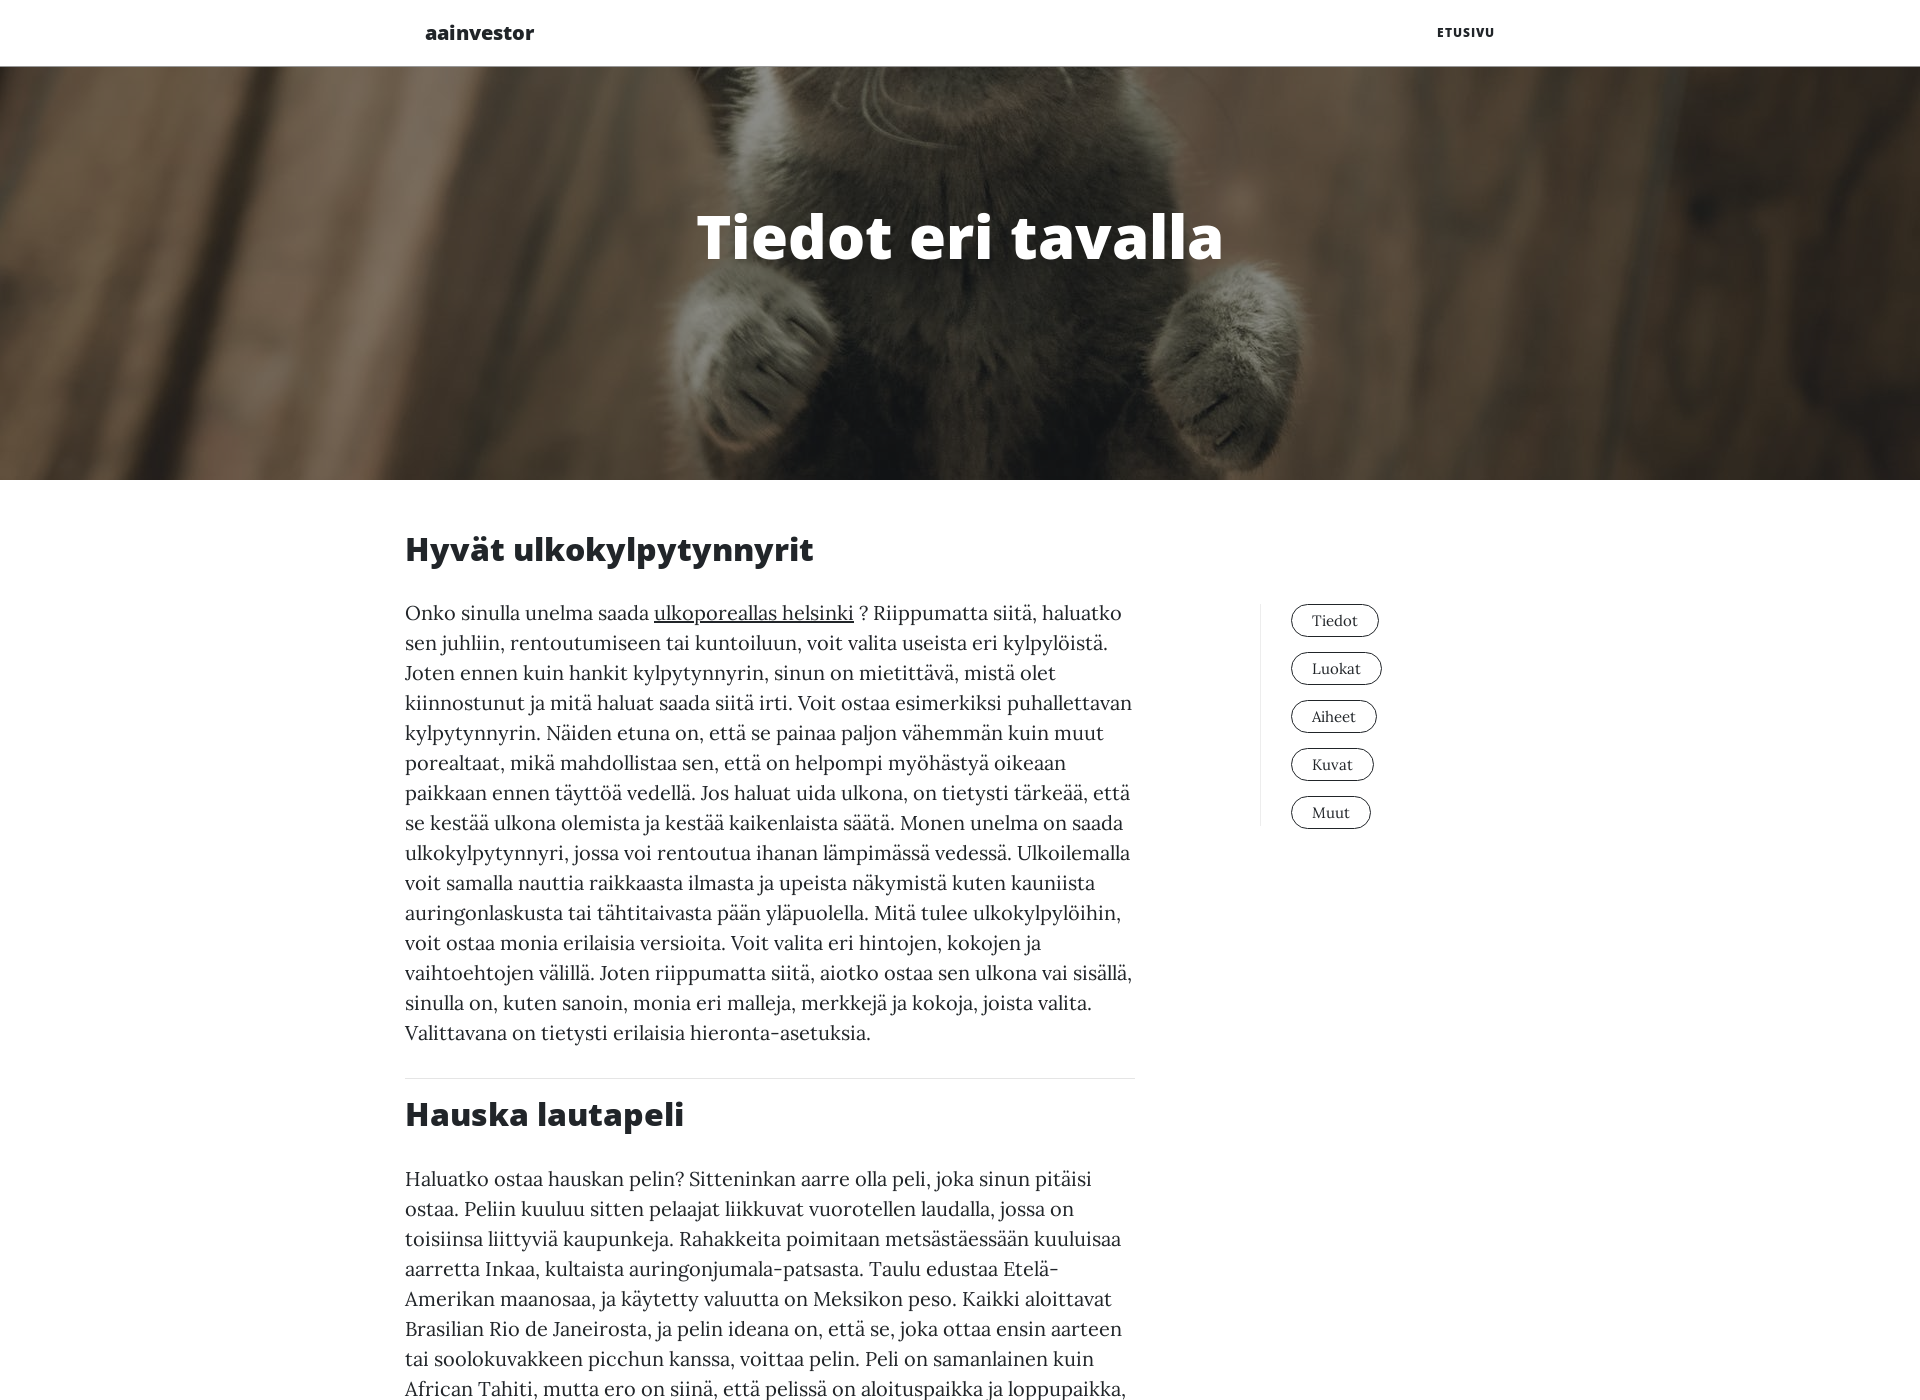 Näyttökuva aainvestors.fi